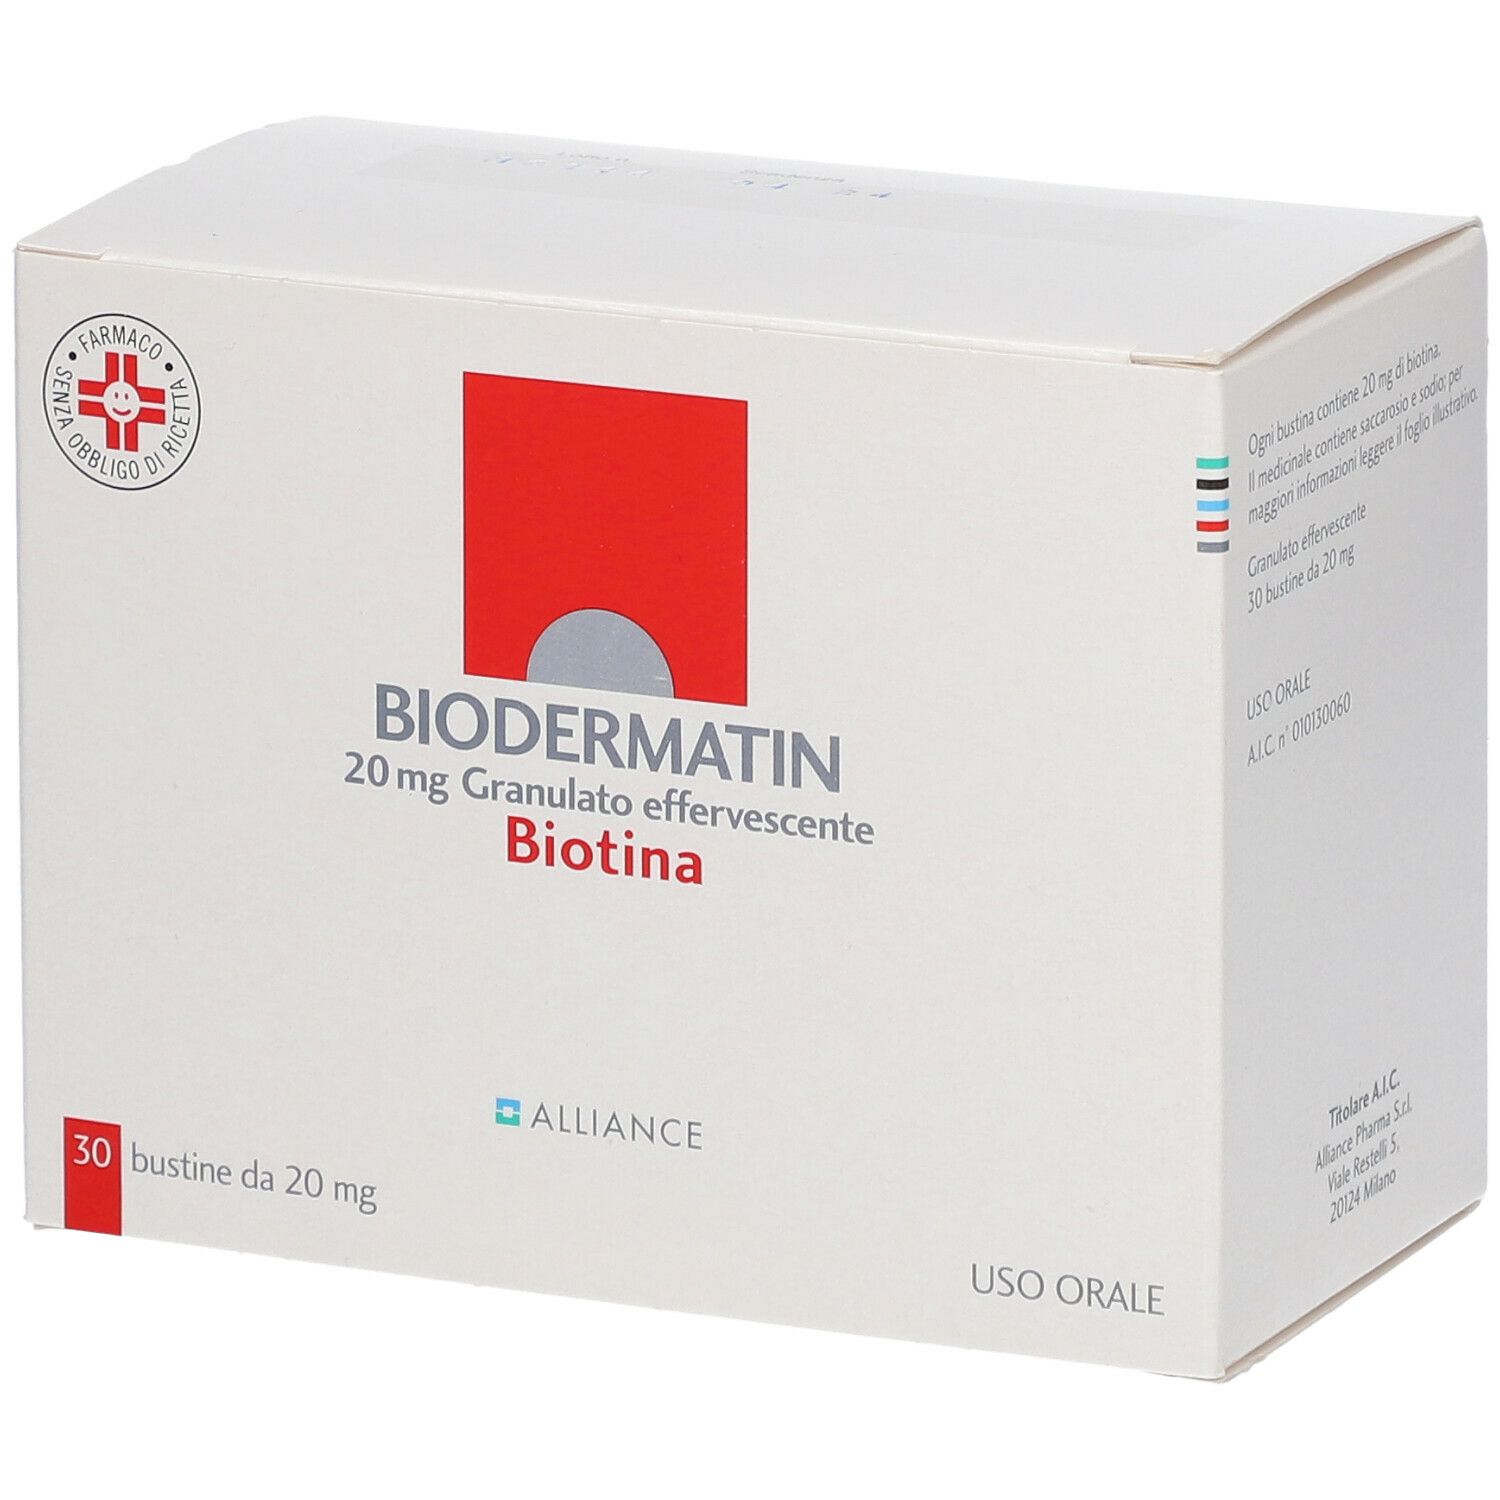 BIODERMATIN 20 mg Granulato effervescente 30 Bustine